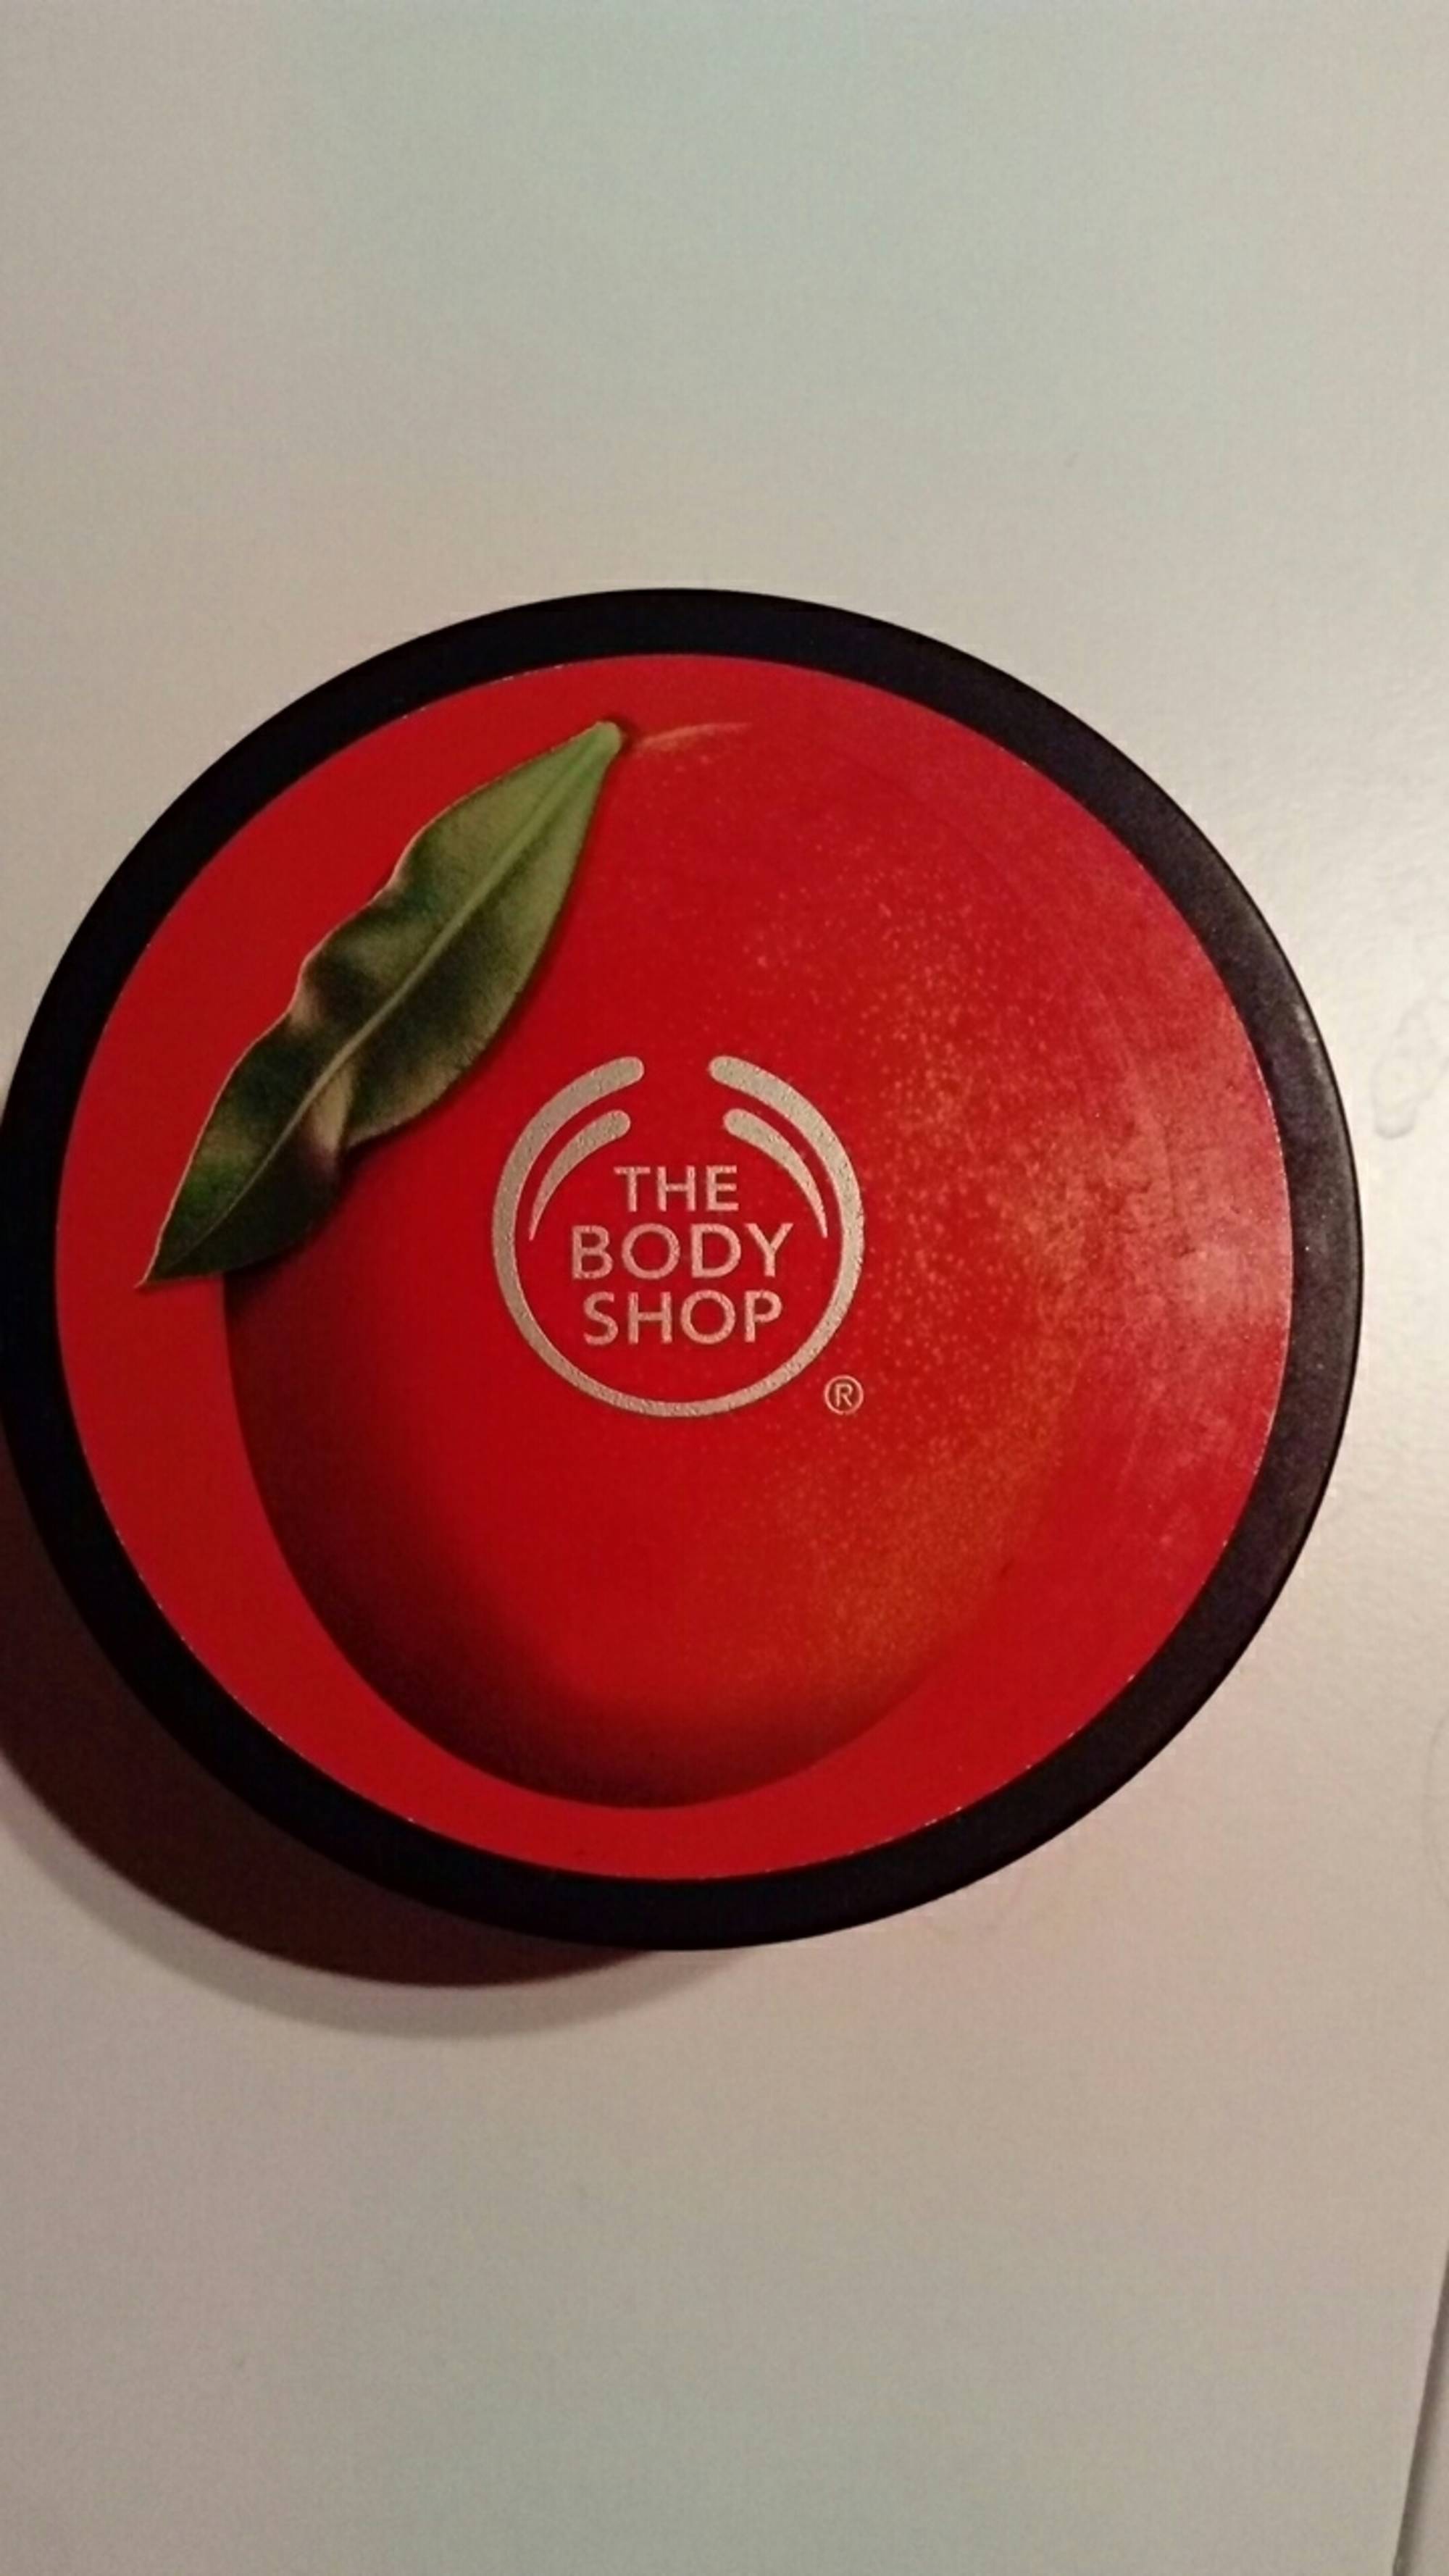 THE BODY SHOP - Mango body butter